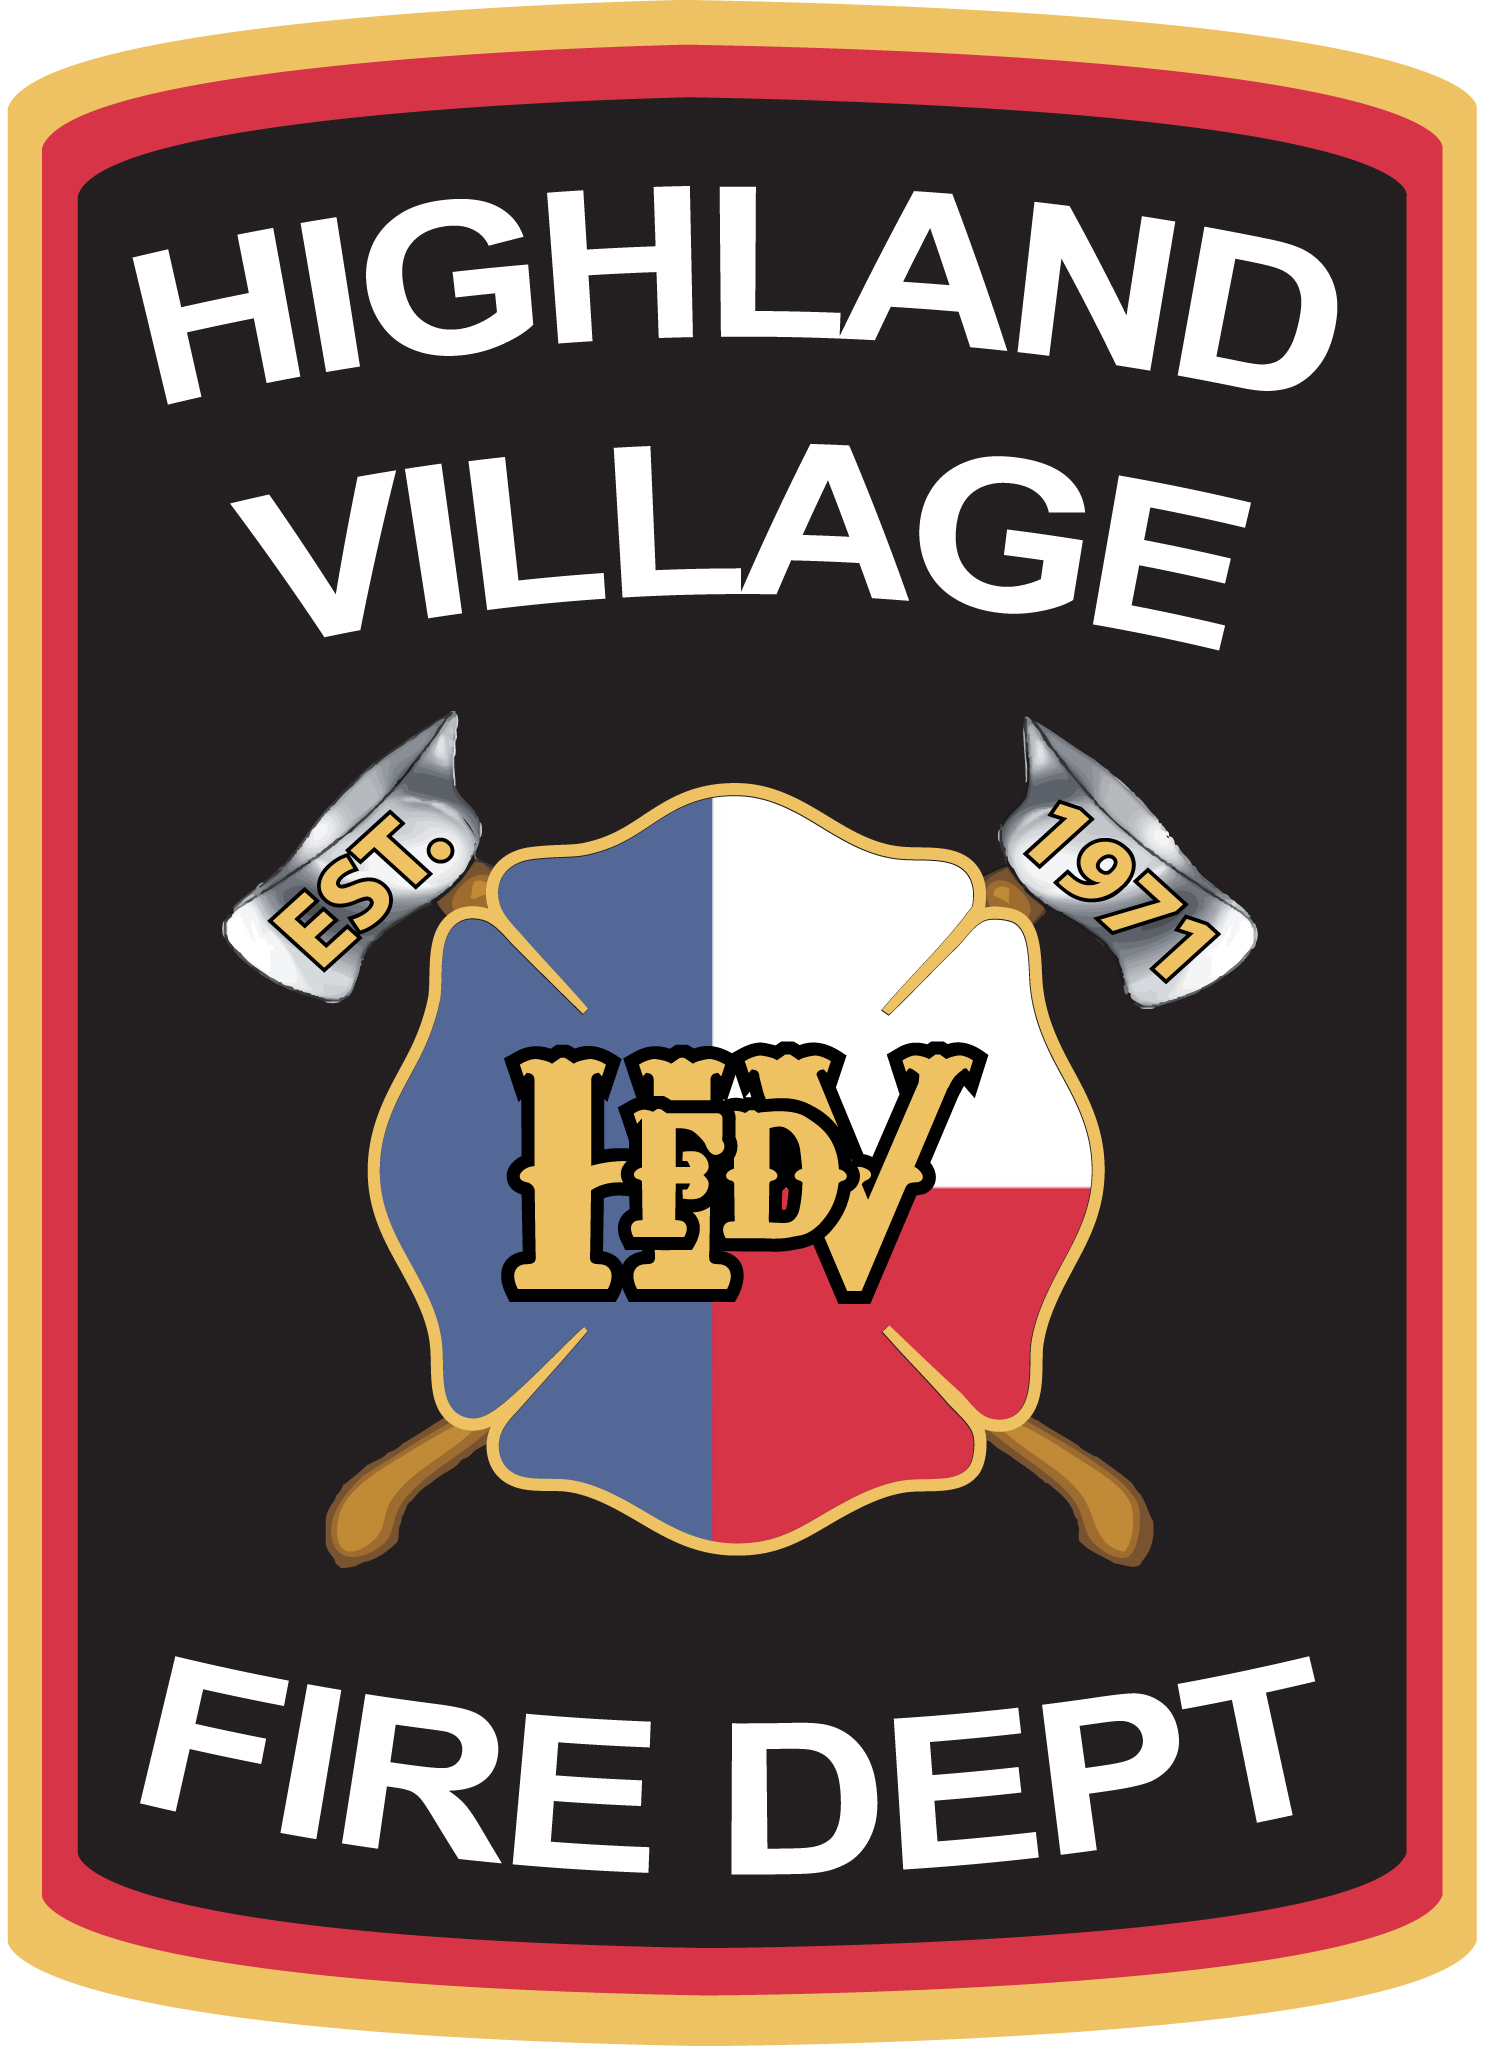 Highland Village Fire Department